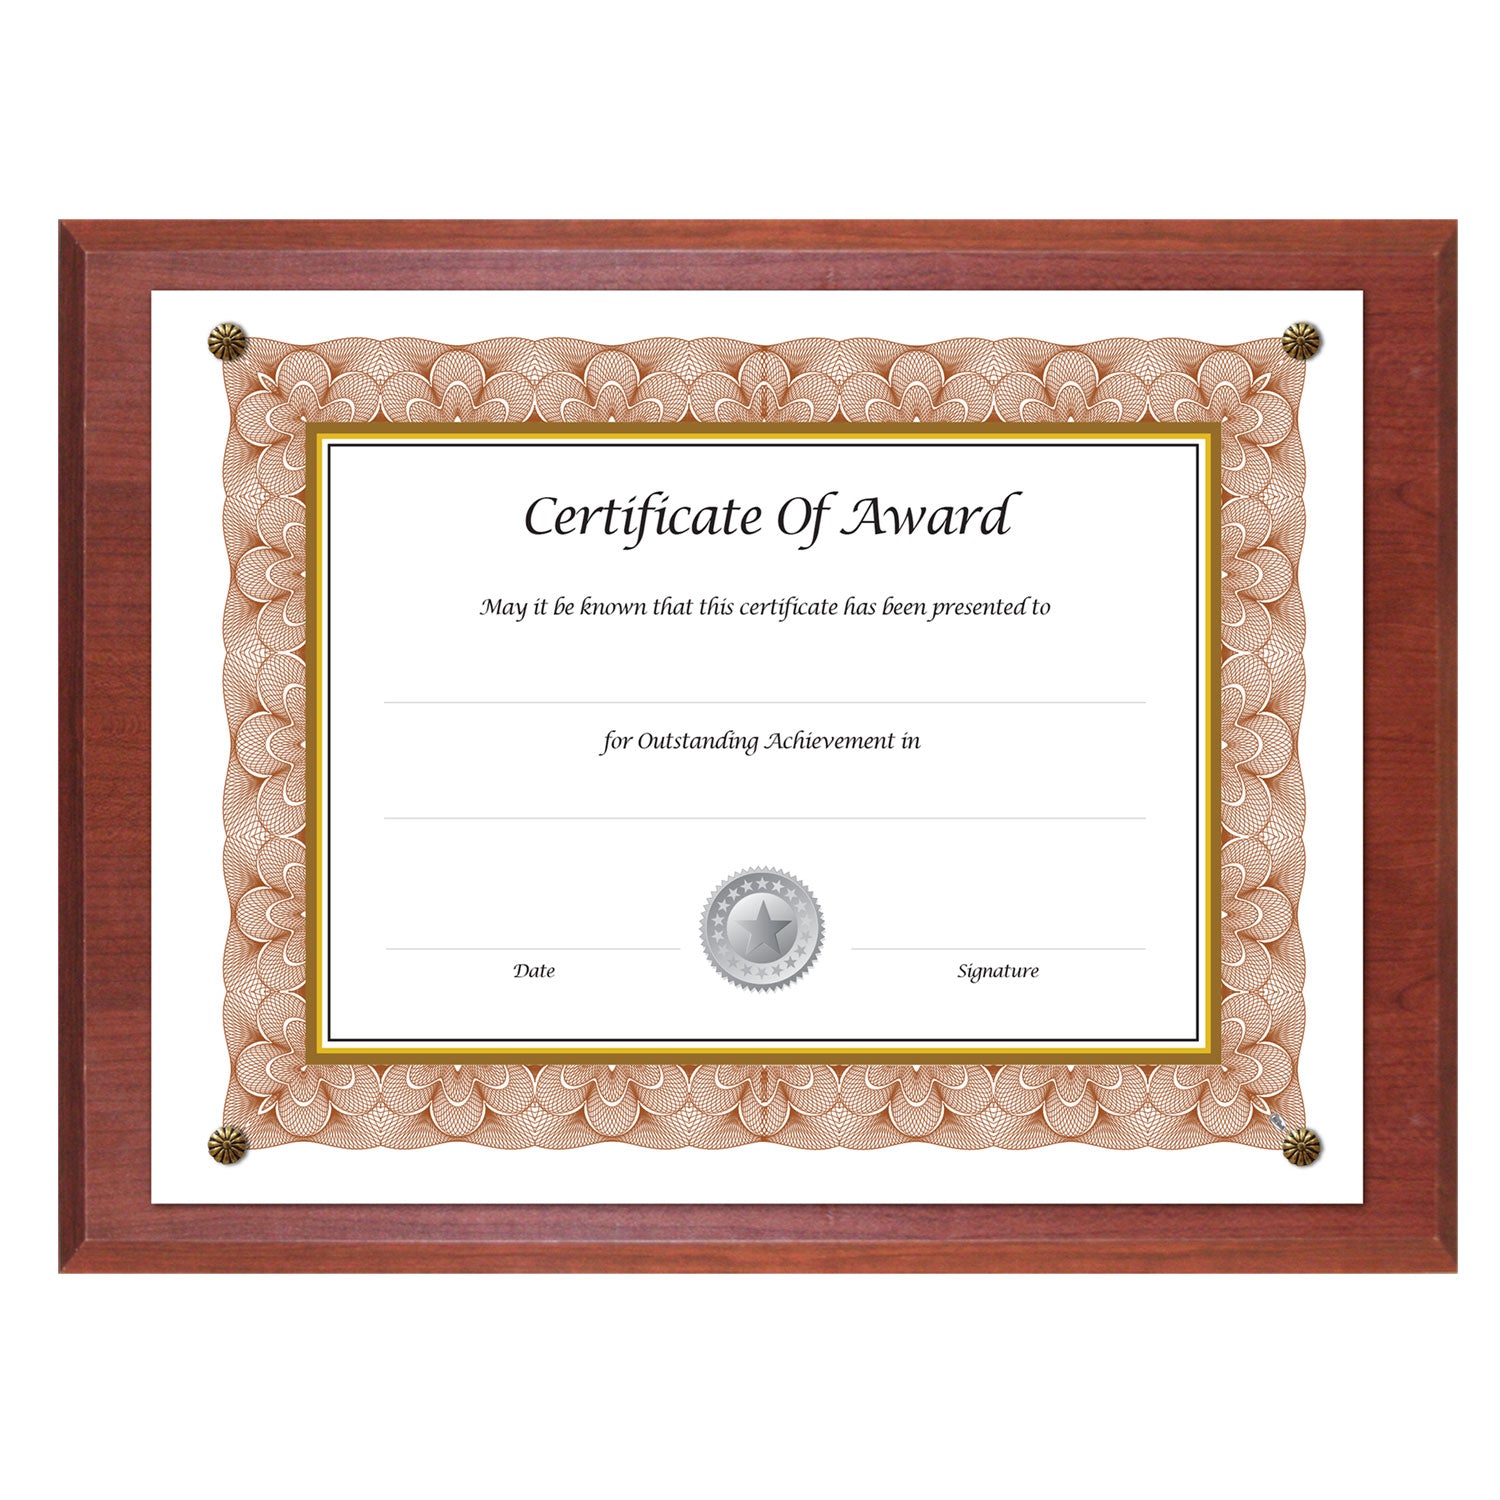 Award-A-Plaque Document Holder, Acrylic/Plastic, 10.5 x 13, Mahogany - 